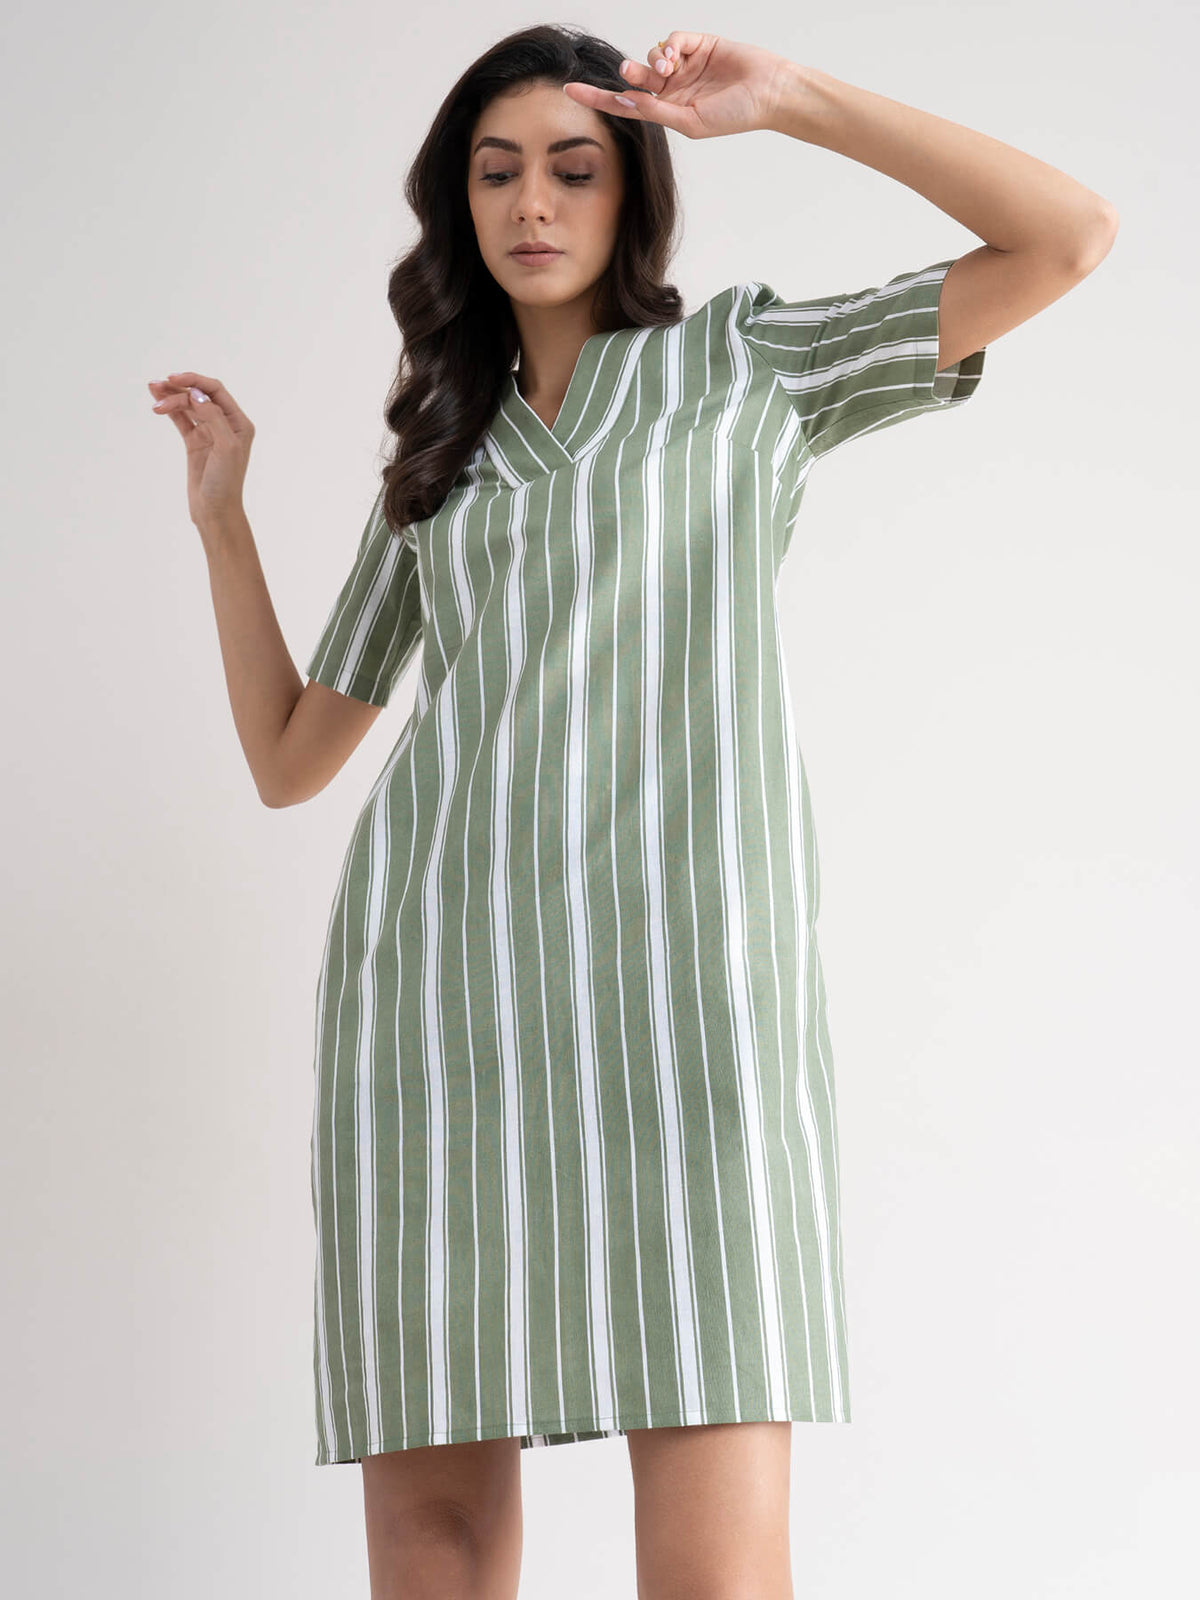 Linen Striped Shift Dress - Olive